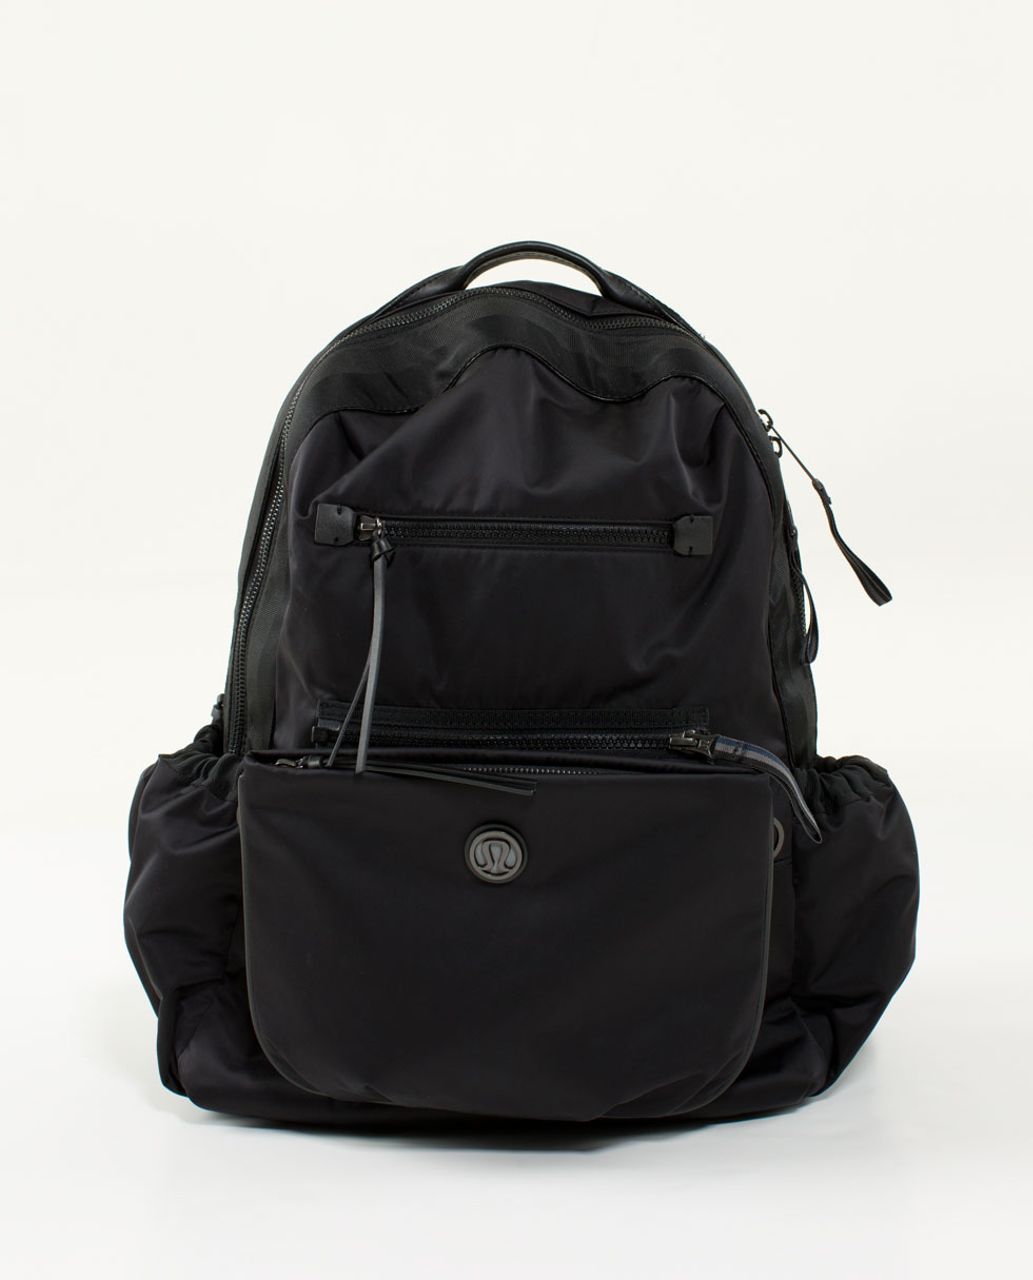 Lululemon Back To Class Backpack - Black